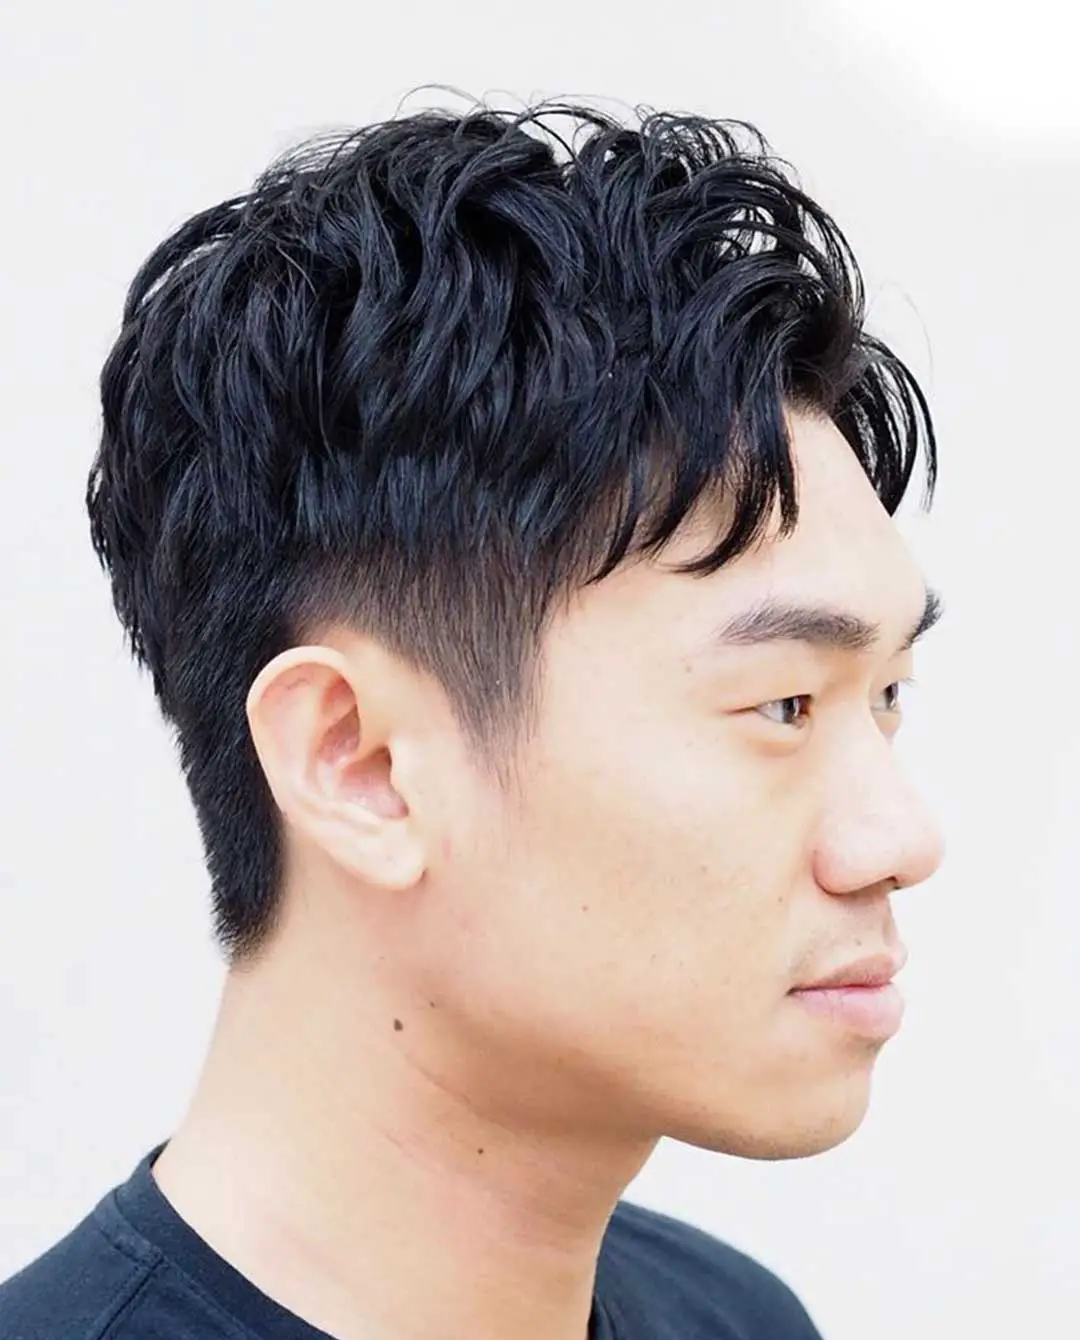 20+ Best Korean Men Haircut & Hairstyle Ideas   Men's Hairstyle Tips